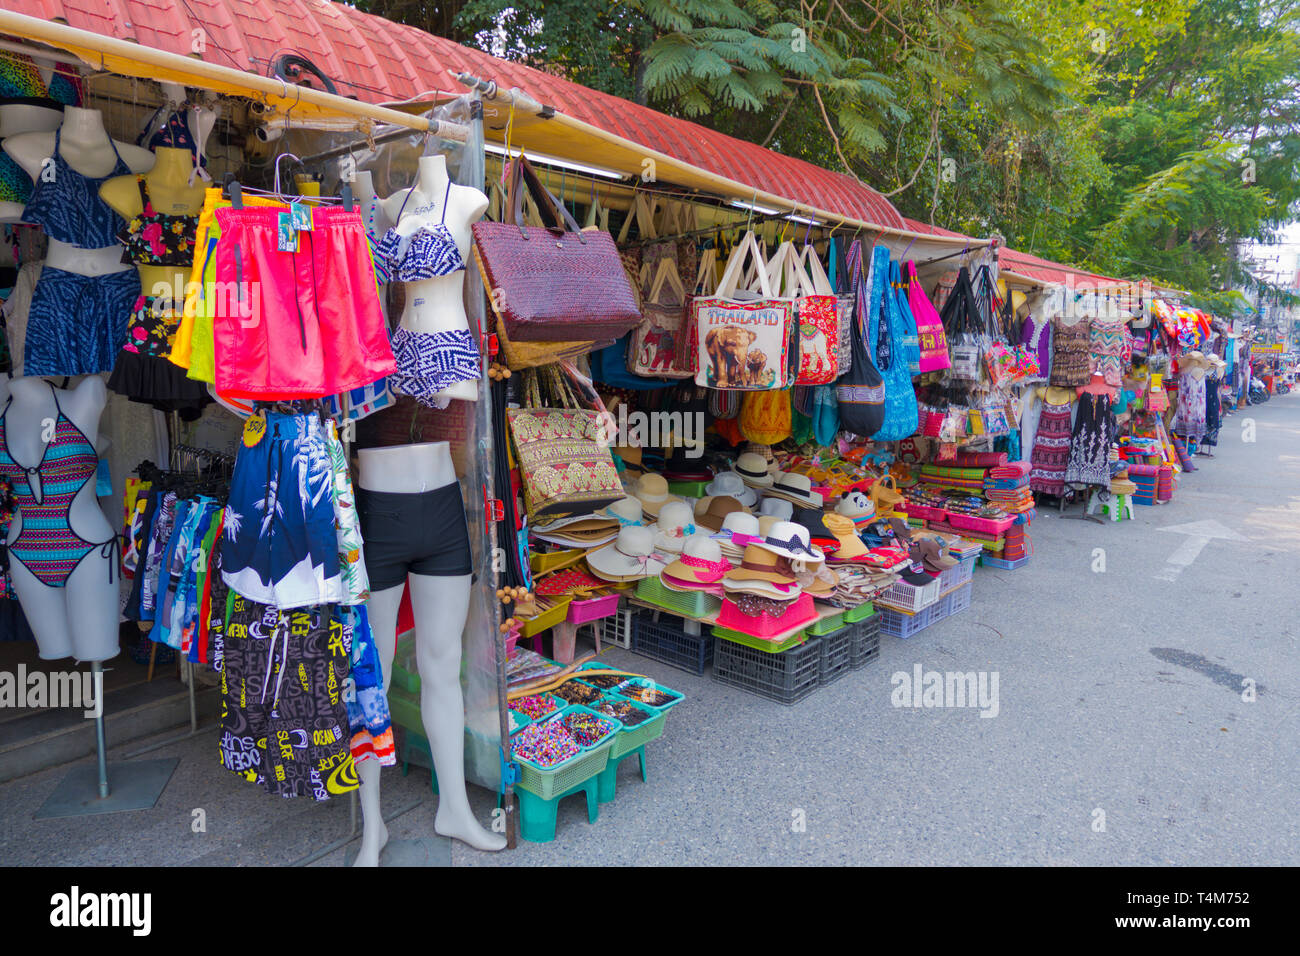 Souvenir and clothing stalls for tourists, Soi Damnoen Kasam, Hua Hin, Thailand Stock Photo